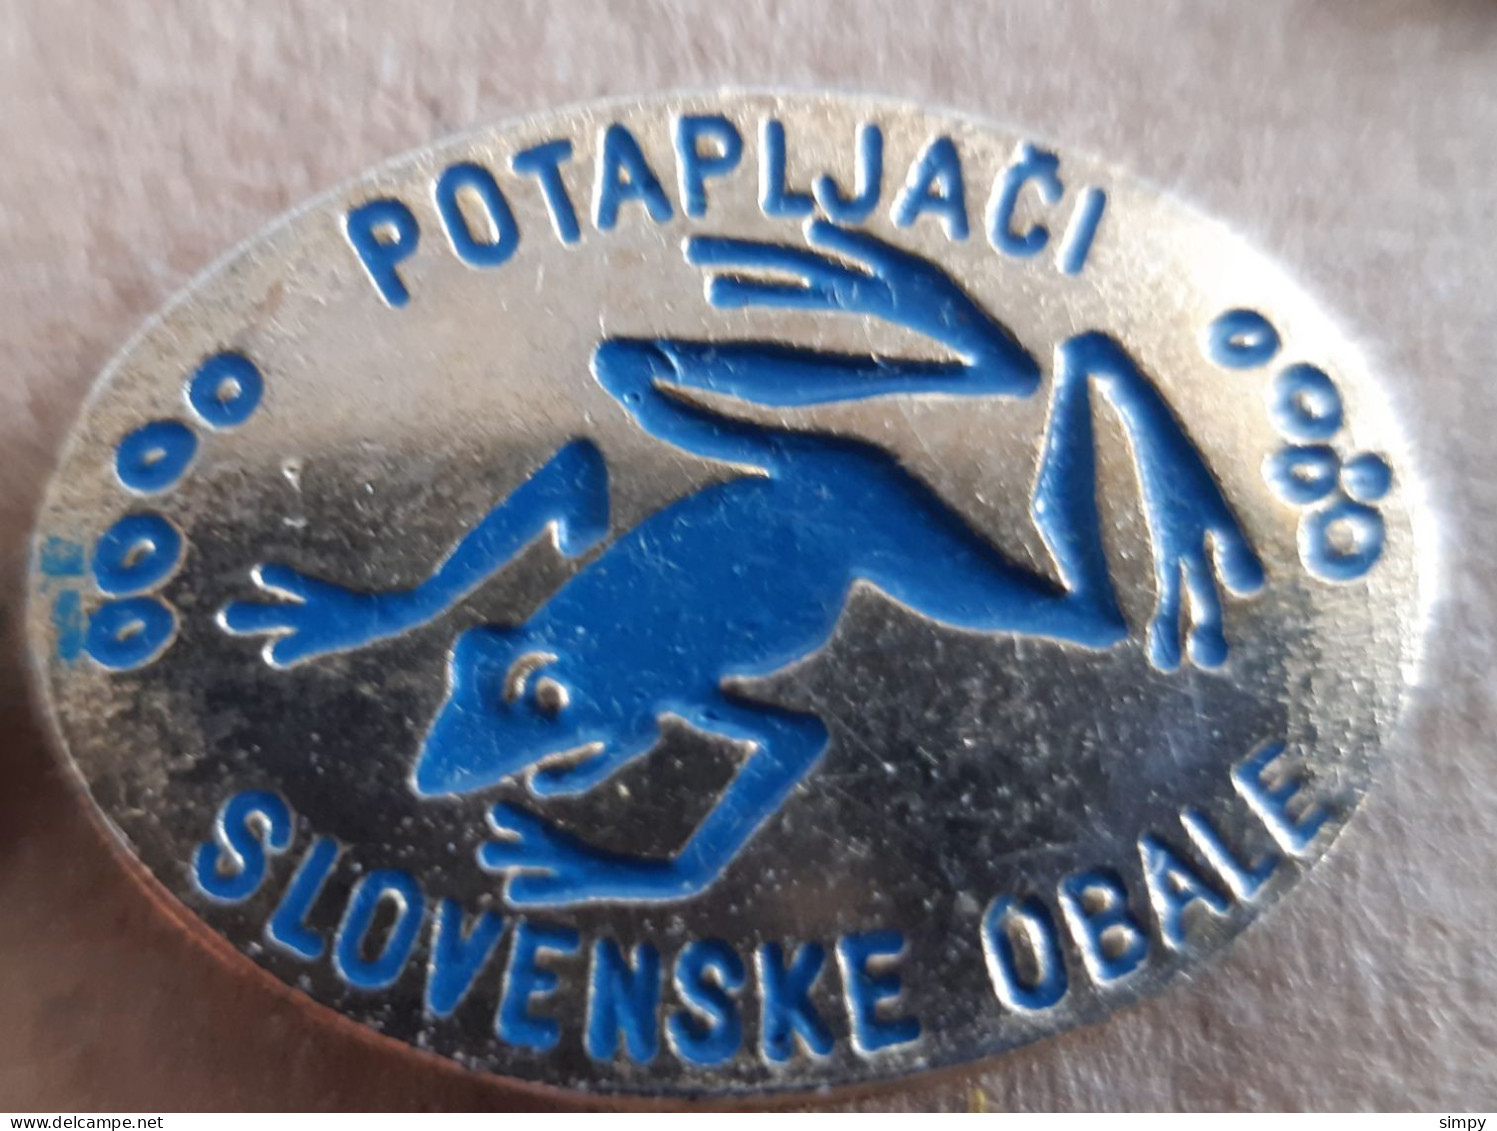 Scuba Diving Club Potapljaci Slovenske Obale Underwater Diving Frog Slovenia Pins - Nuoto